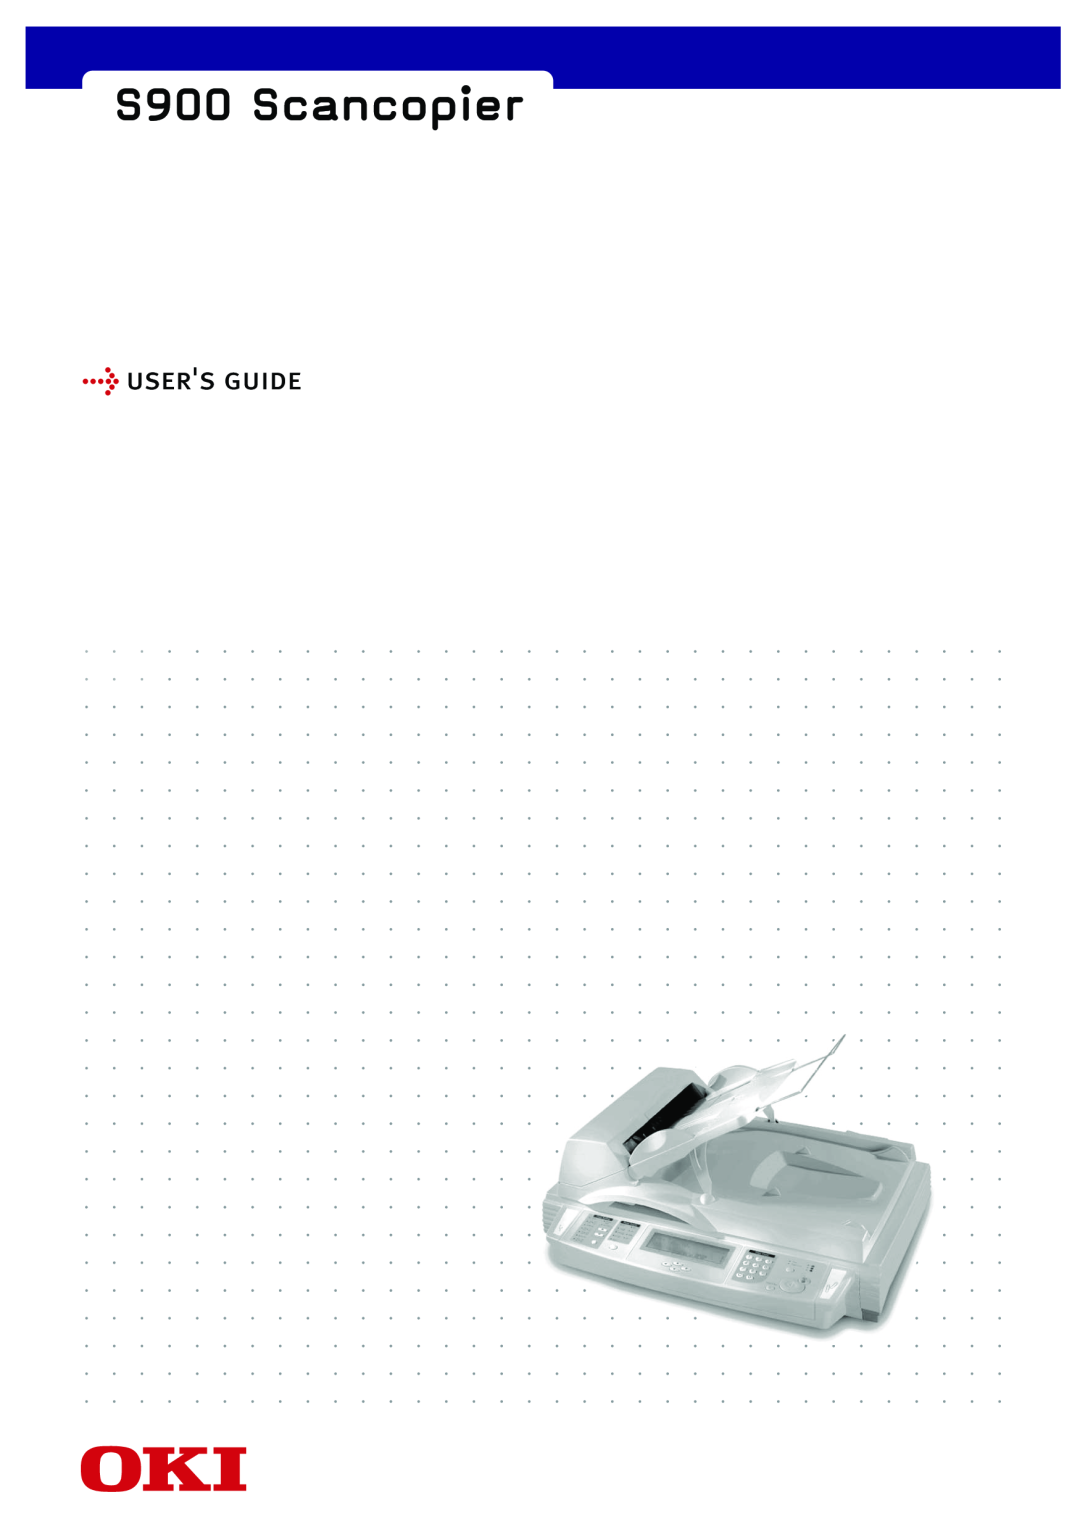 Oki manual users guide, S900 Scancopier 